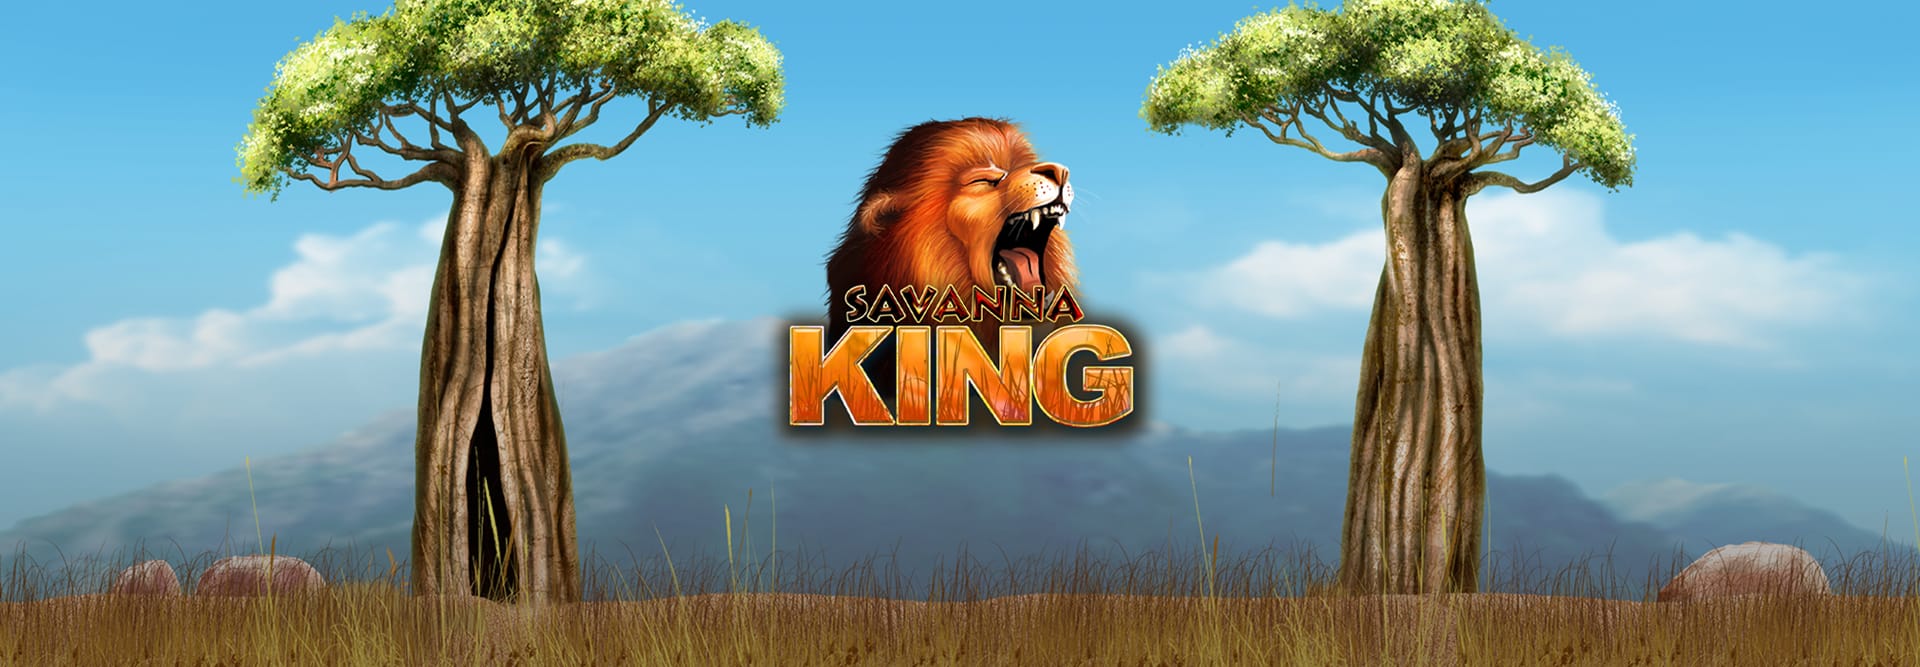 Savanna King logo